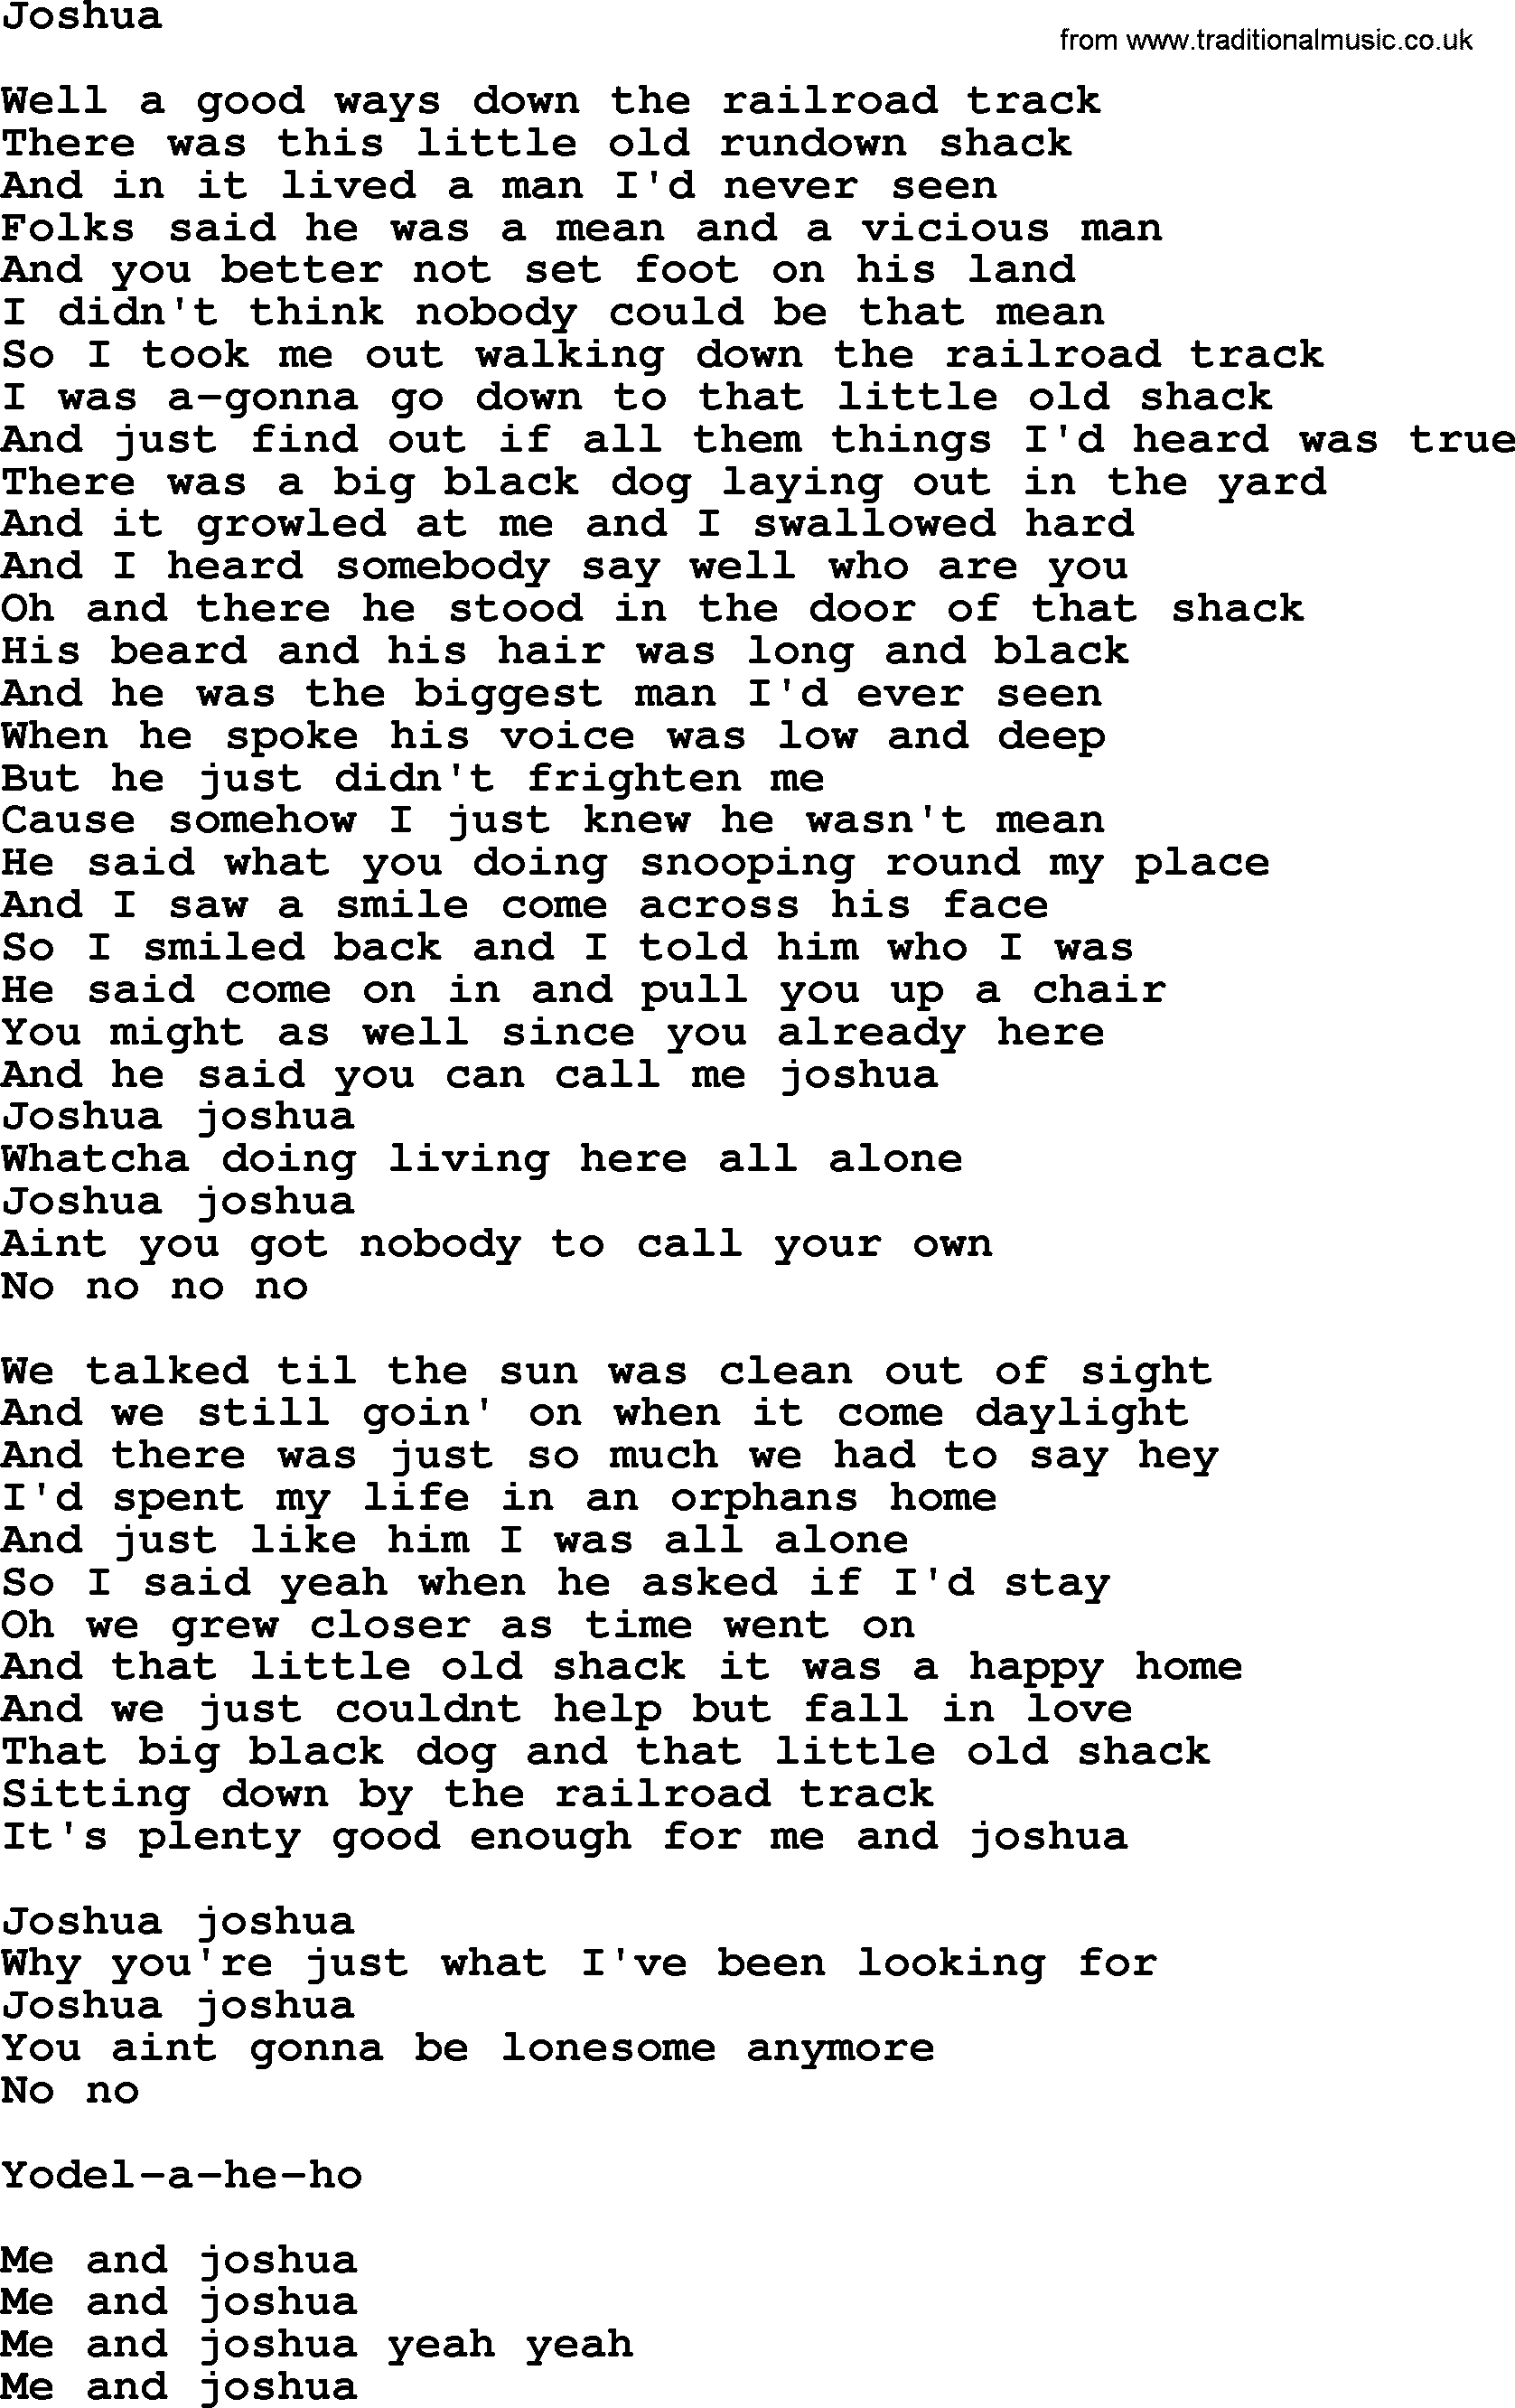 Dolly Parton song Joshua.txt lyrics